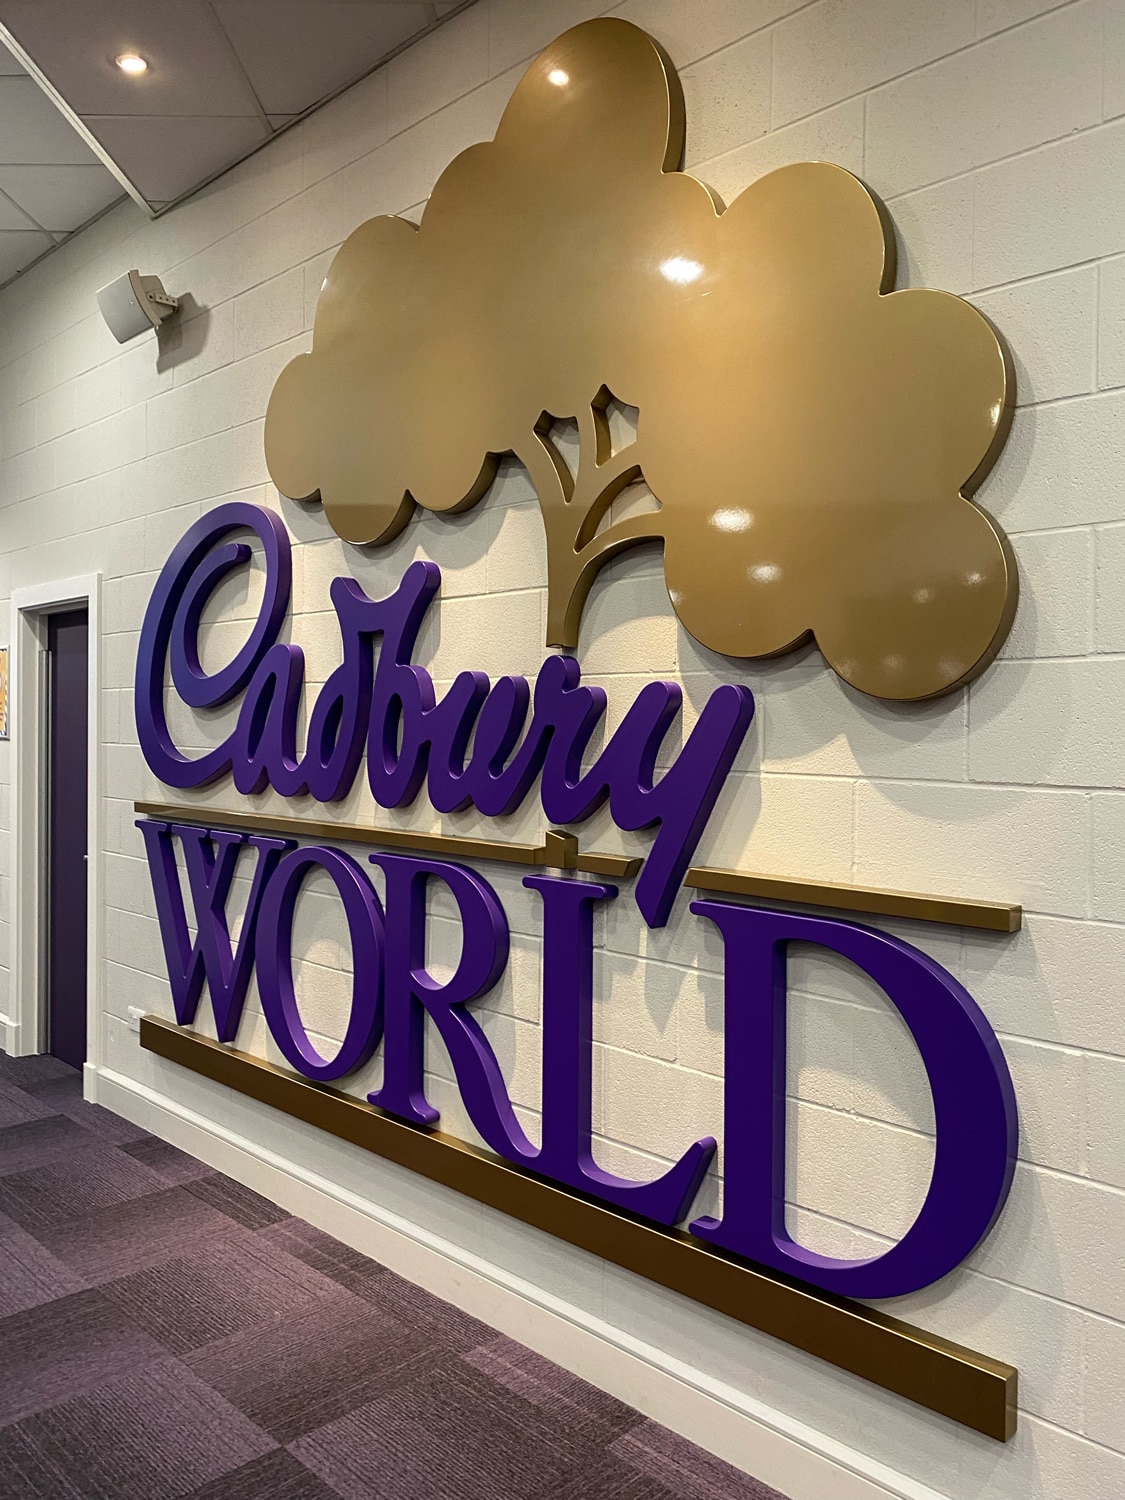 Cadbury World sign